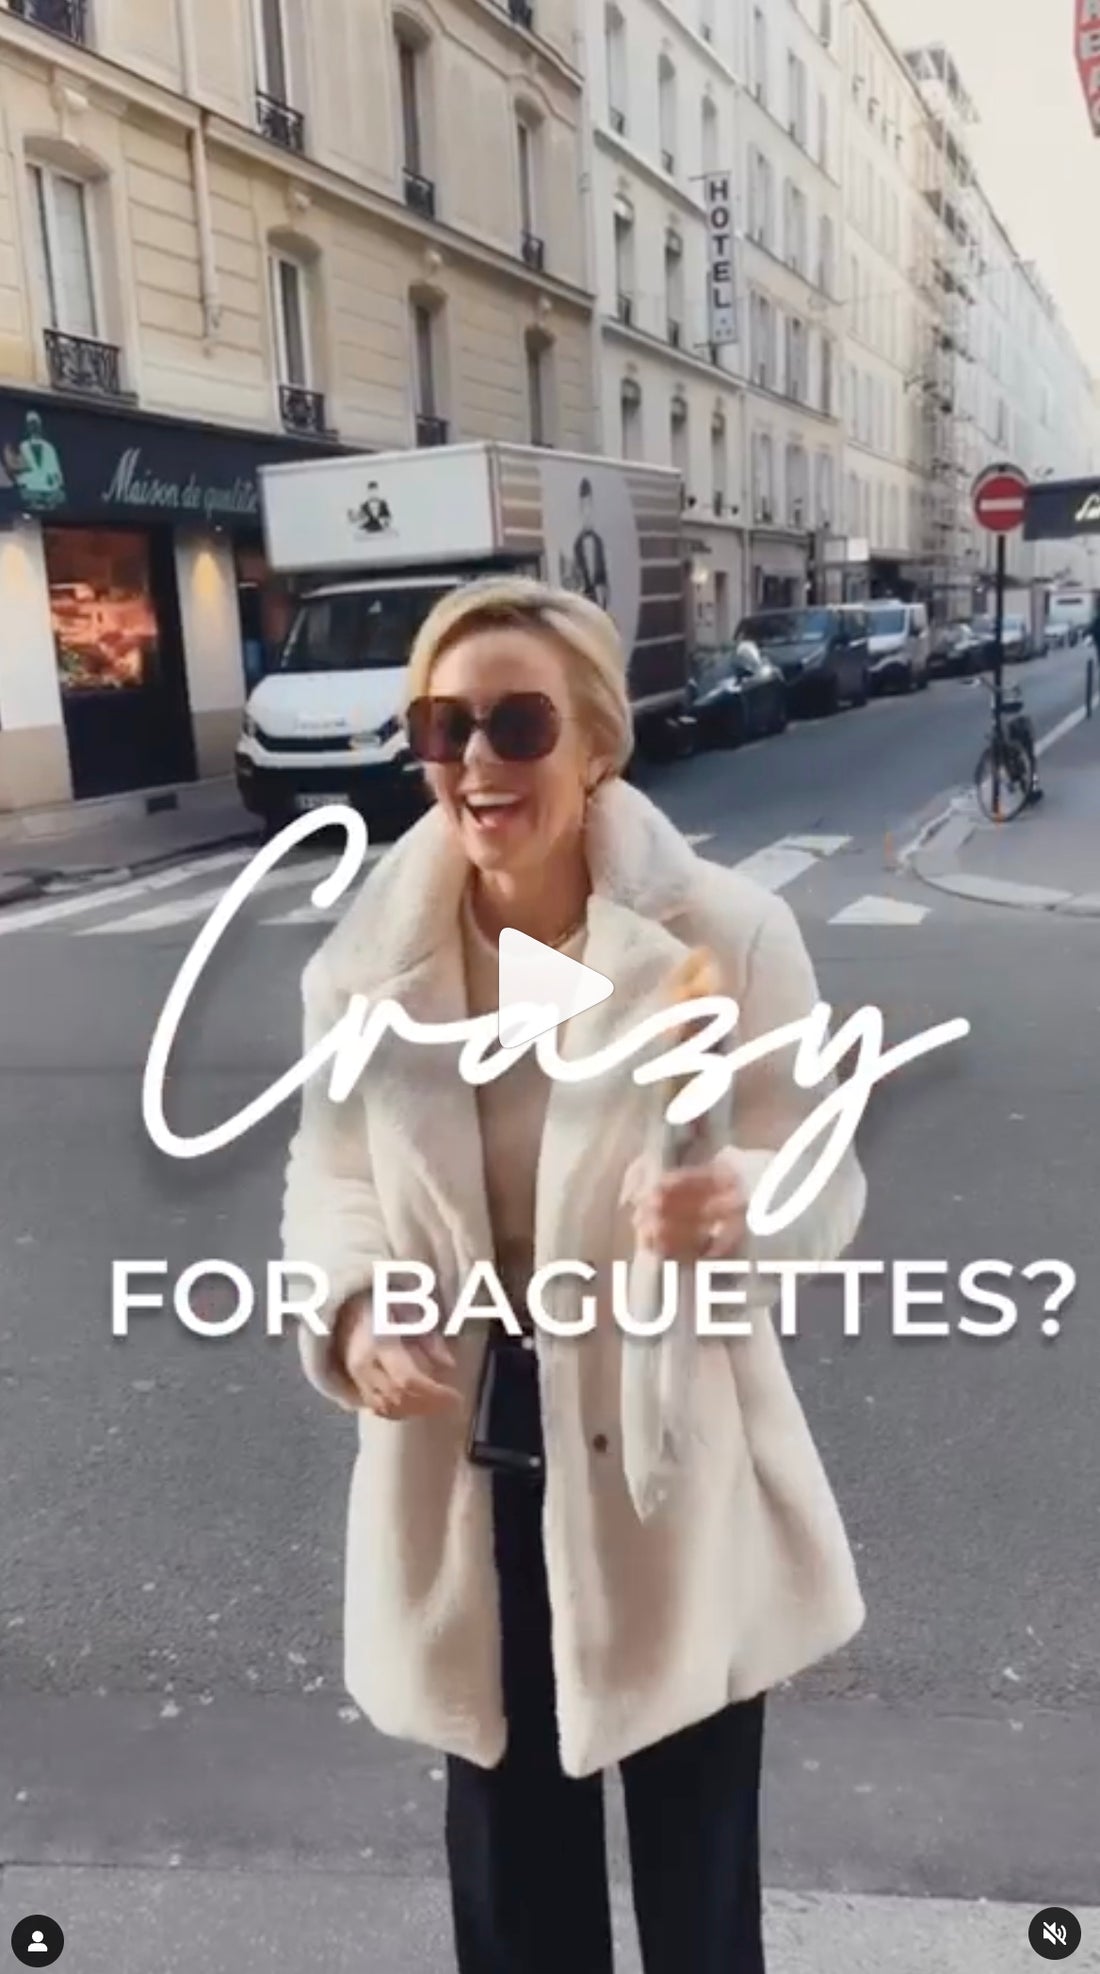 Five award-winning Parisian bakers & five baguette recipe ideas.